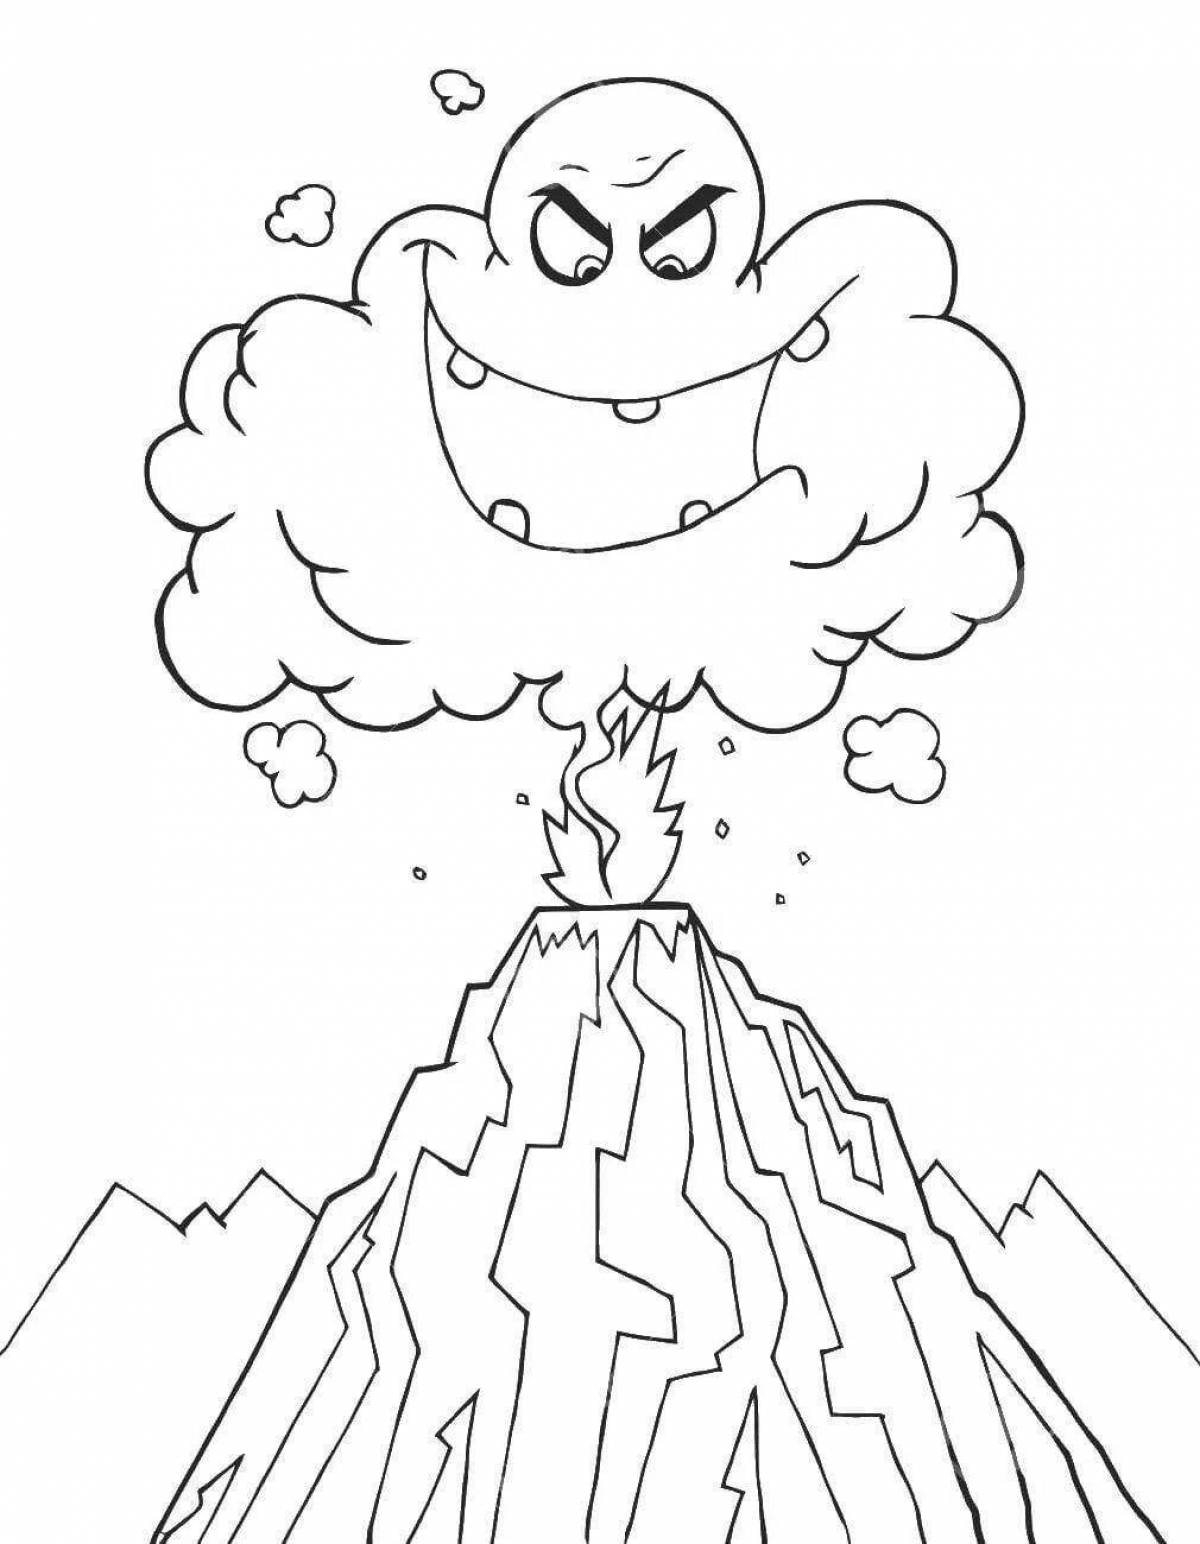 Volcanic eruption #8